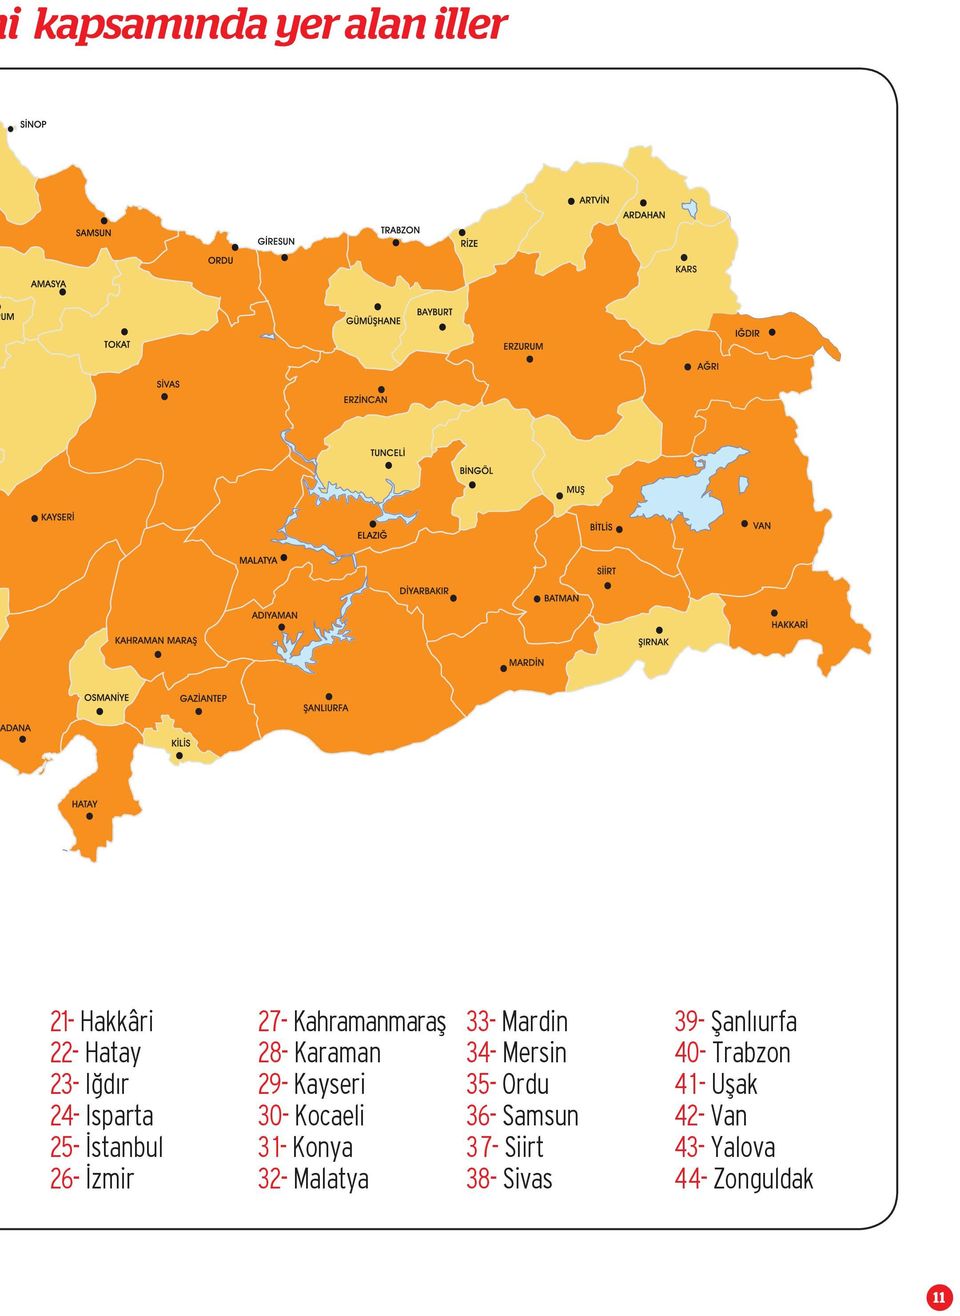 31- Konya 32- Malatya 33- Mardin 34- Mersin 35- Ordu 36- Samsun 37- Siirt